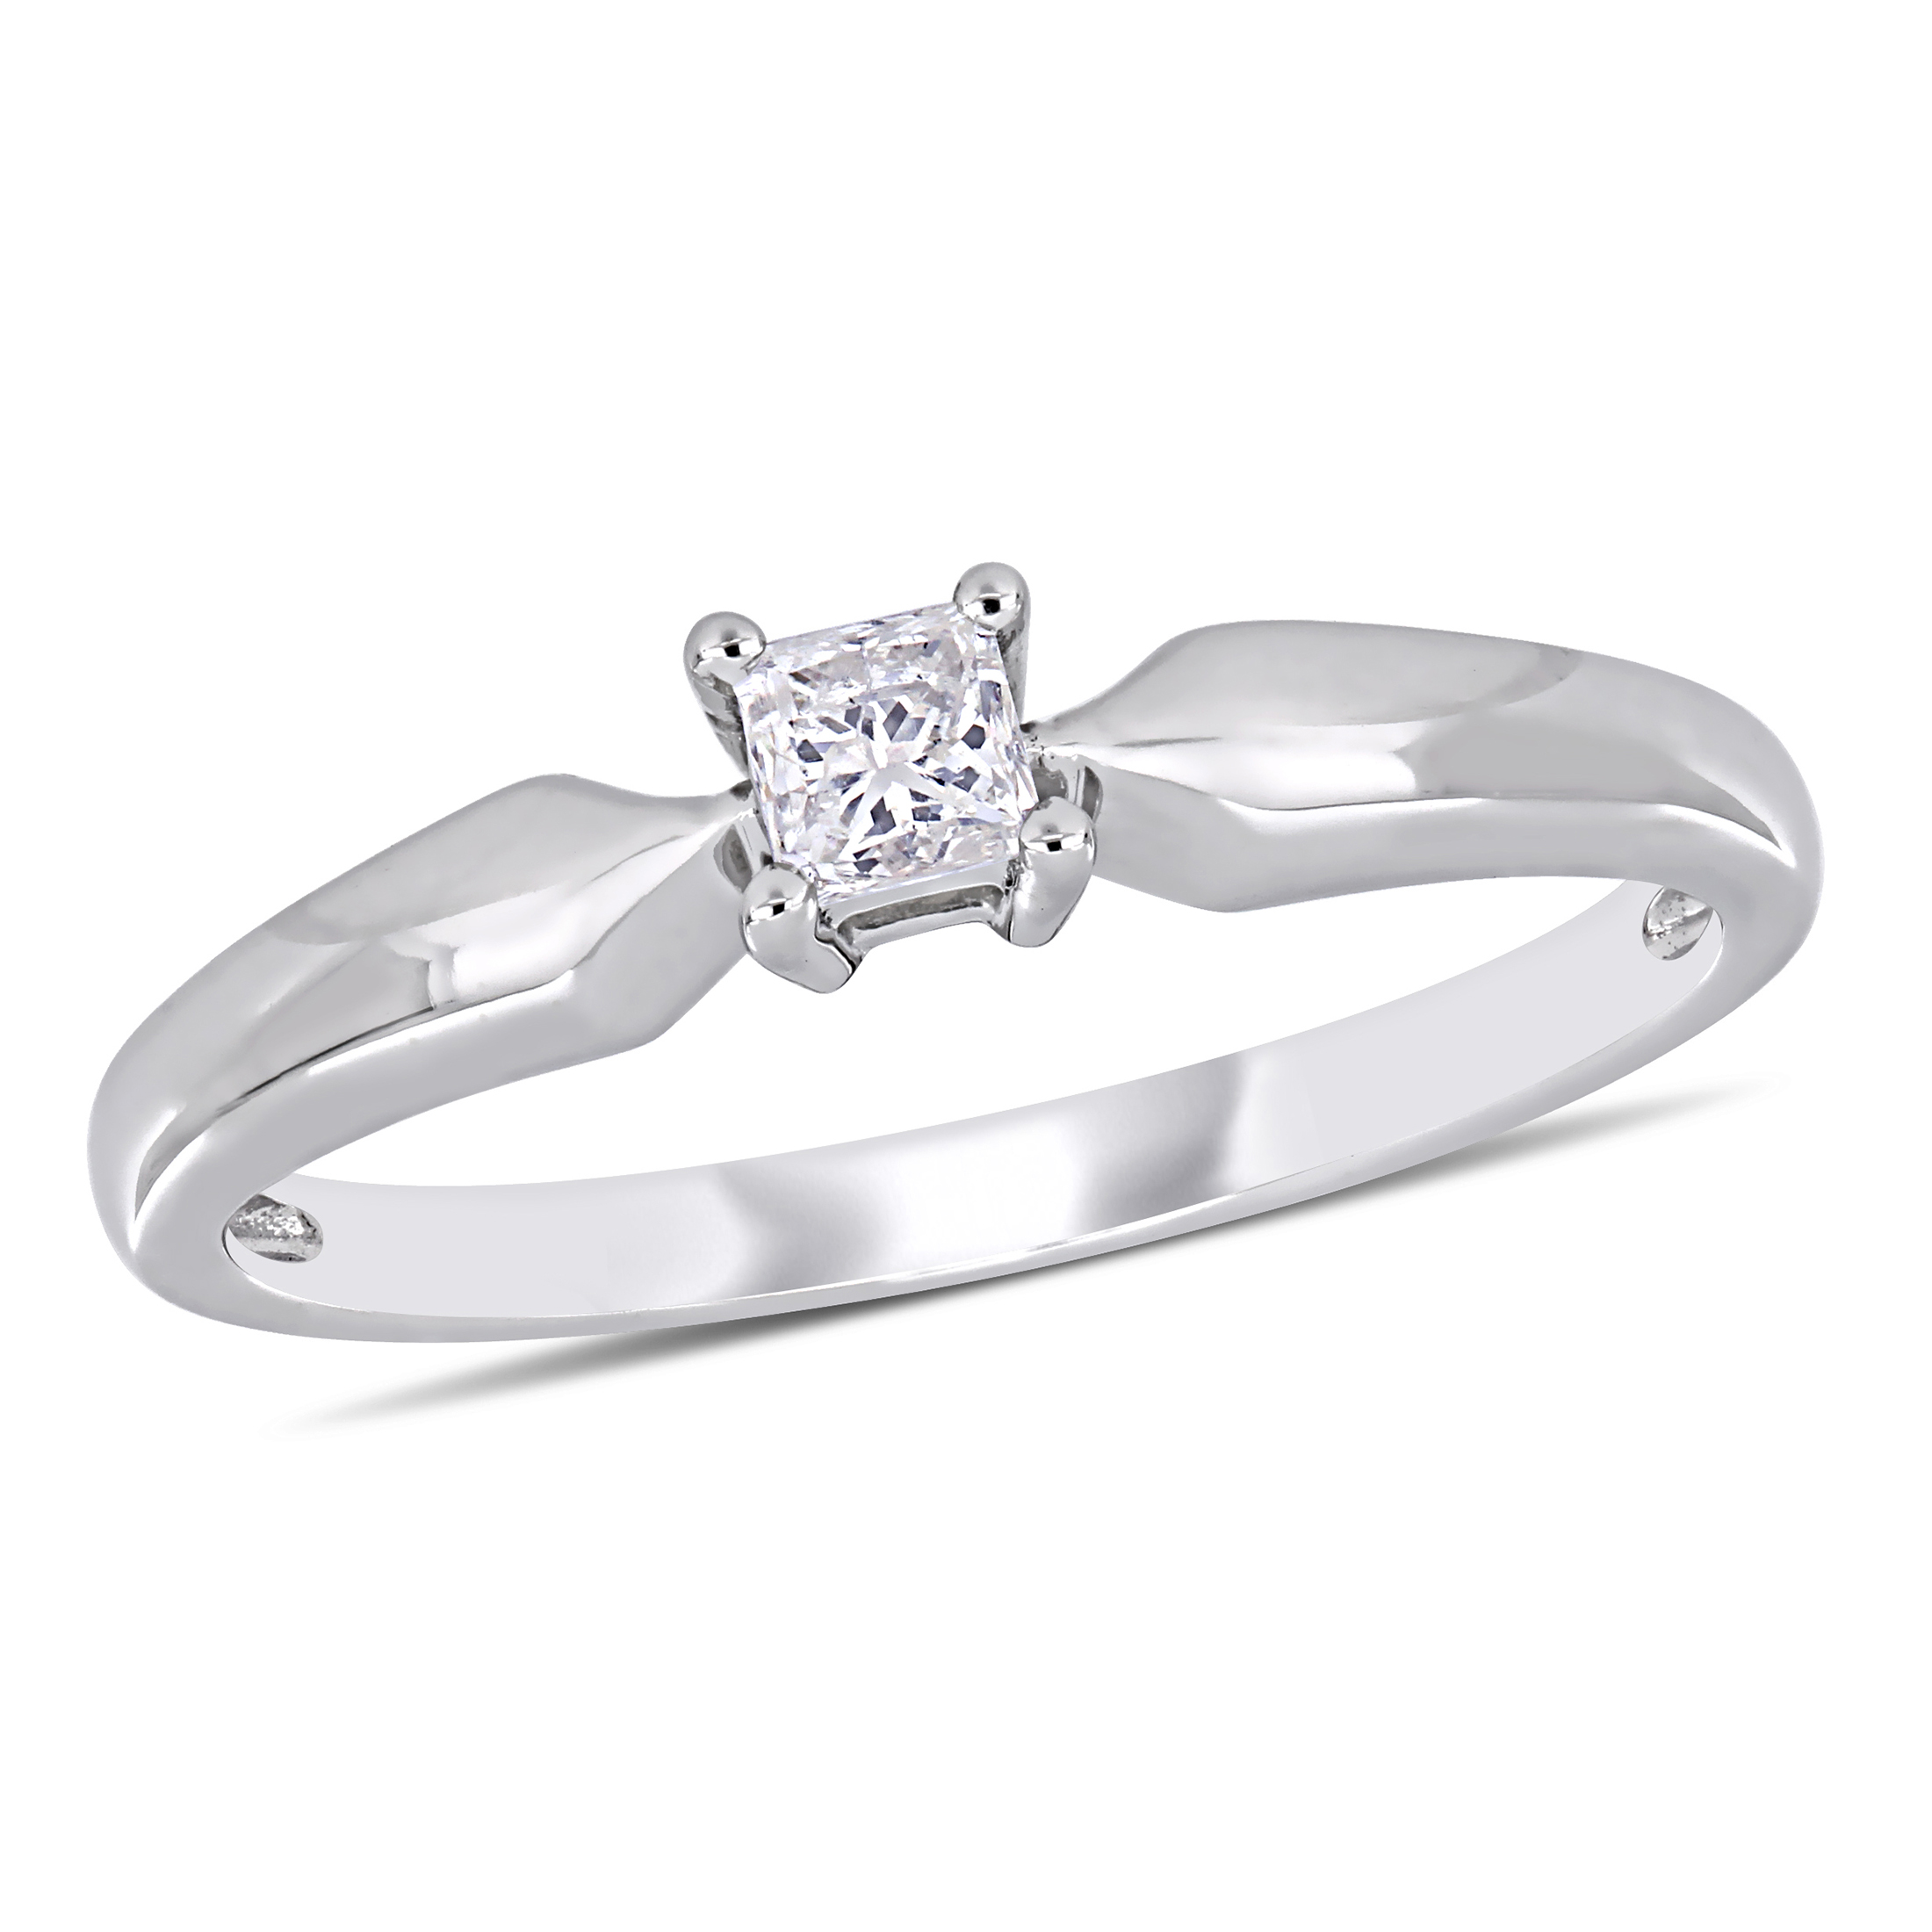 Miabella Women's 1/5 Carat T.W. Princess-Cut Diamond 10kt White Gold Solitaire Engagement Ring - image 1 of 7